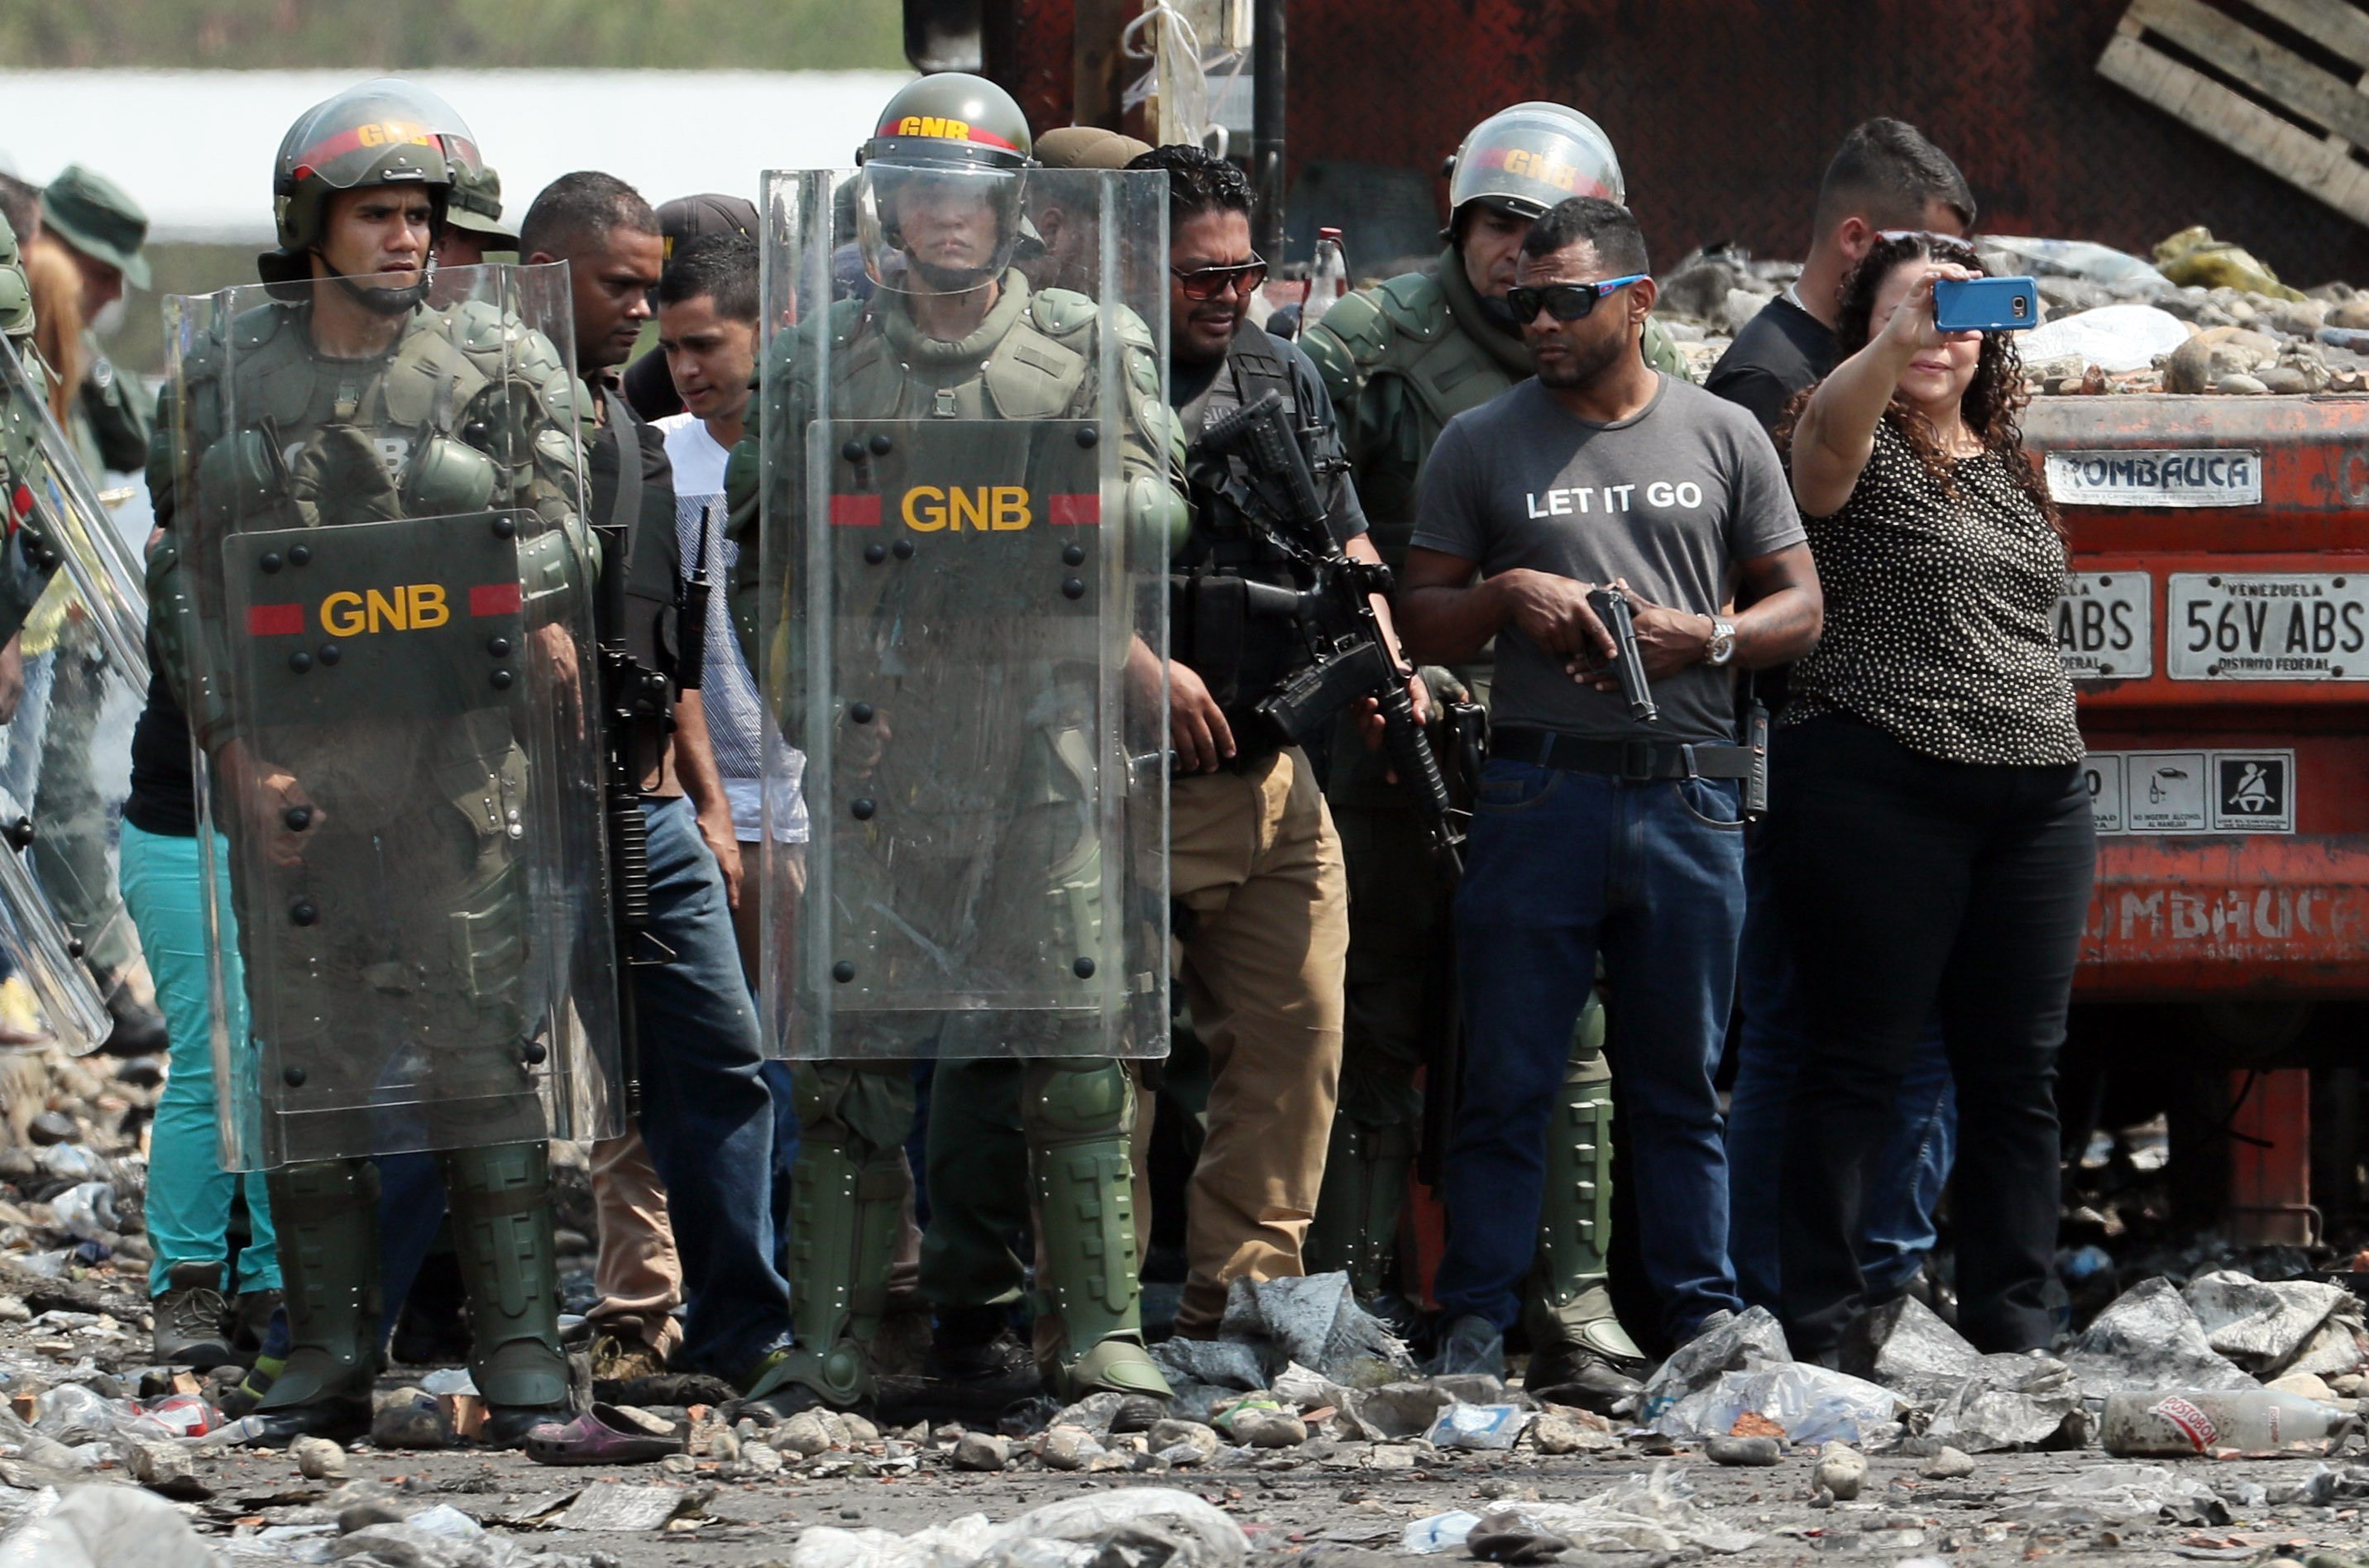 Venezuela judicial woes exacerbated as prison guards extort inmates